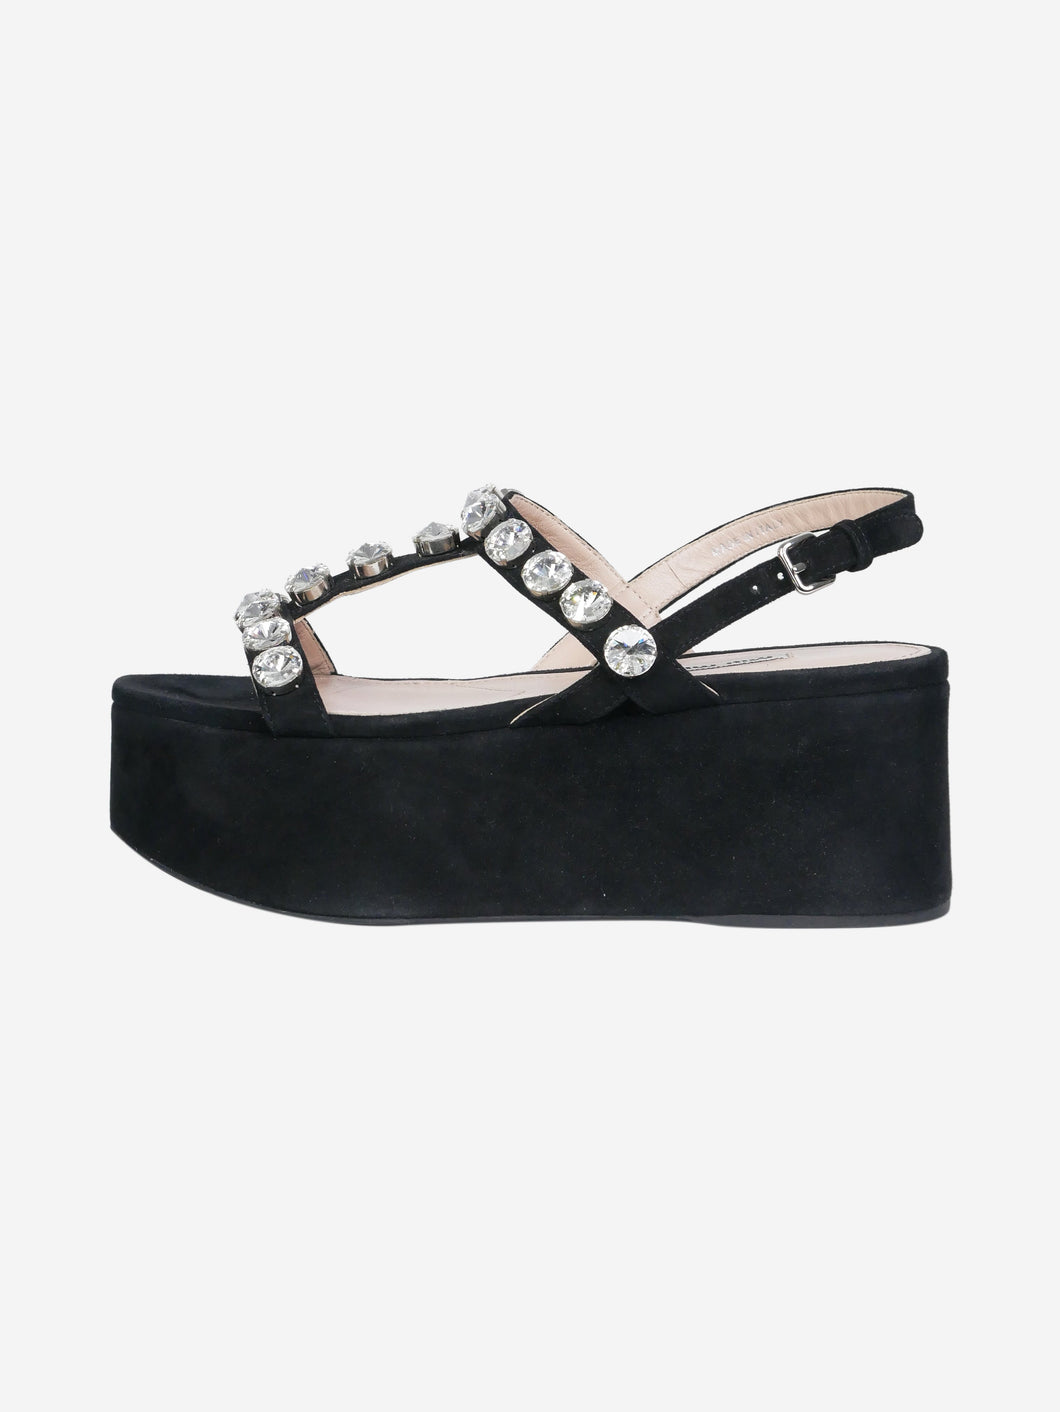 Black suede bejewelled platform sandals - size EU 36.5 Flat Sandals Miu Miu 